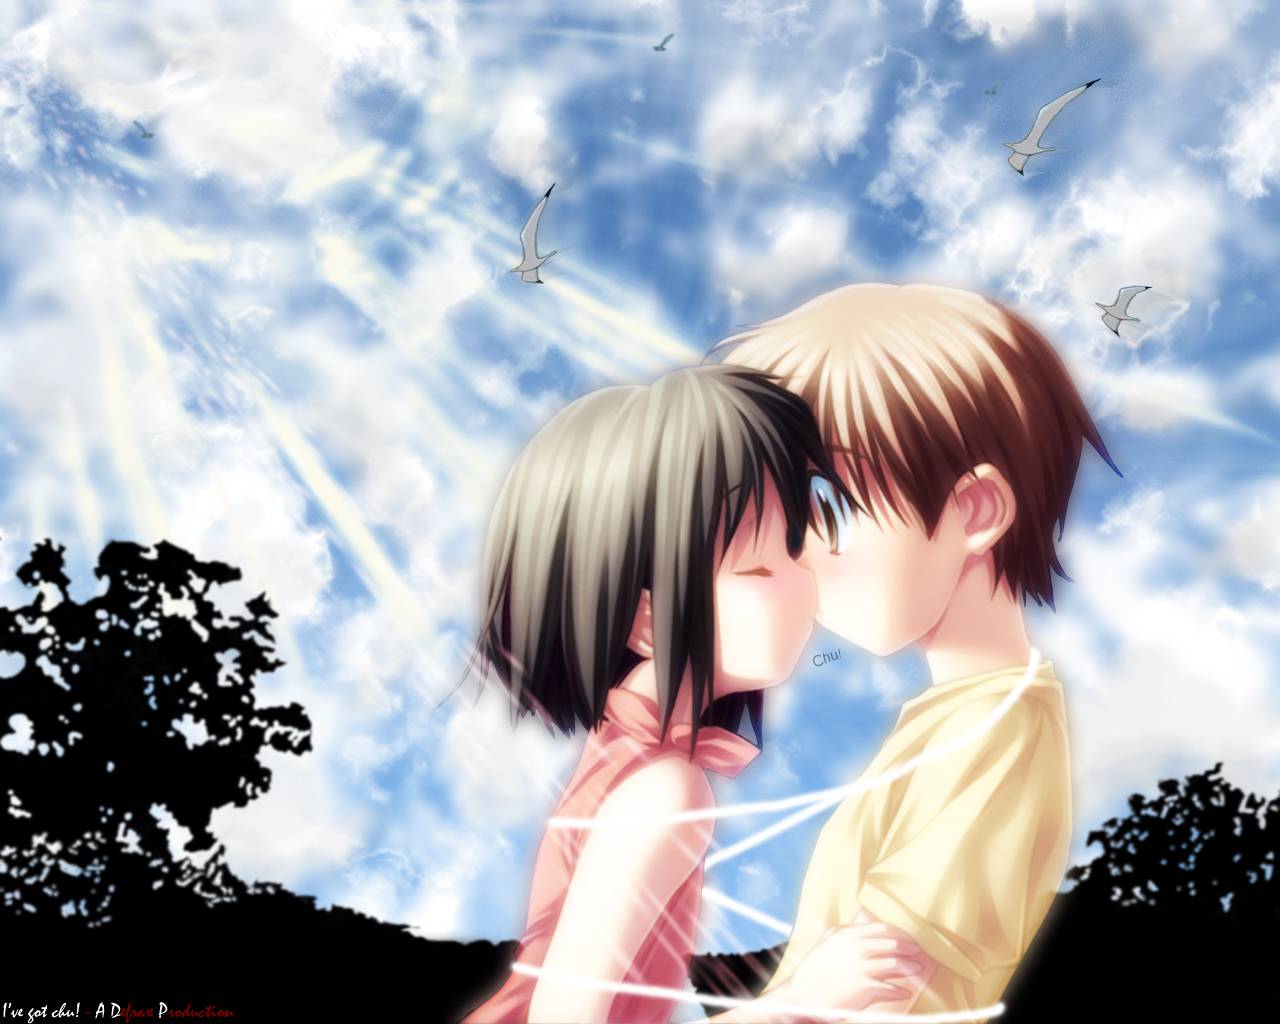 Anime Kiss GIFs  GIFDBcom